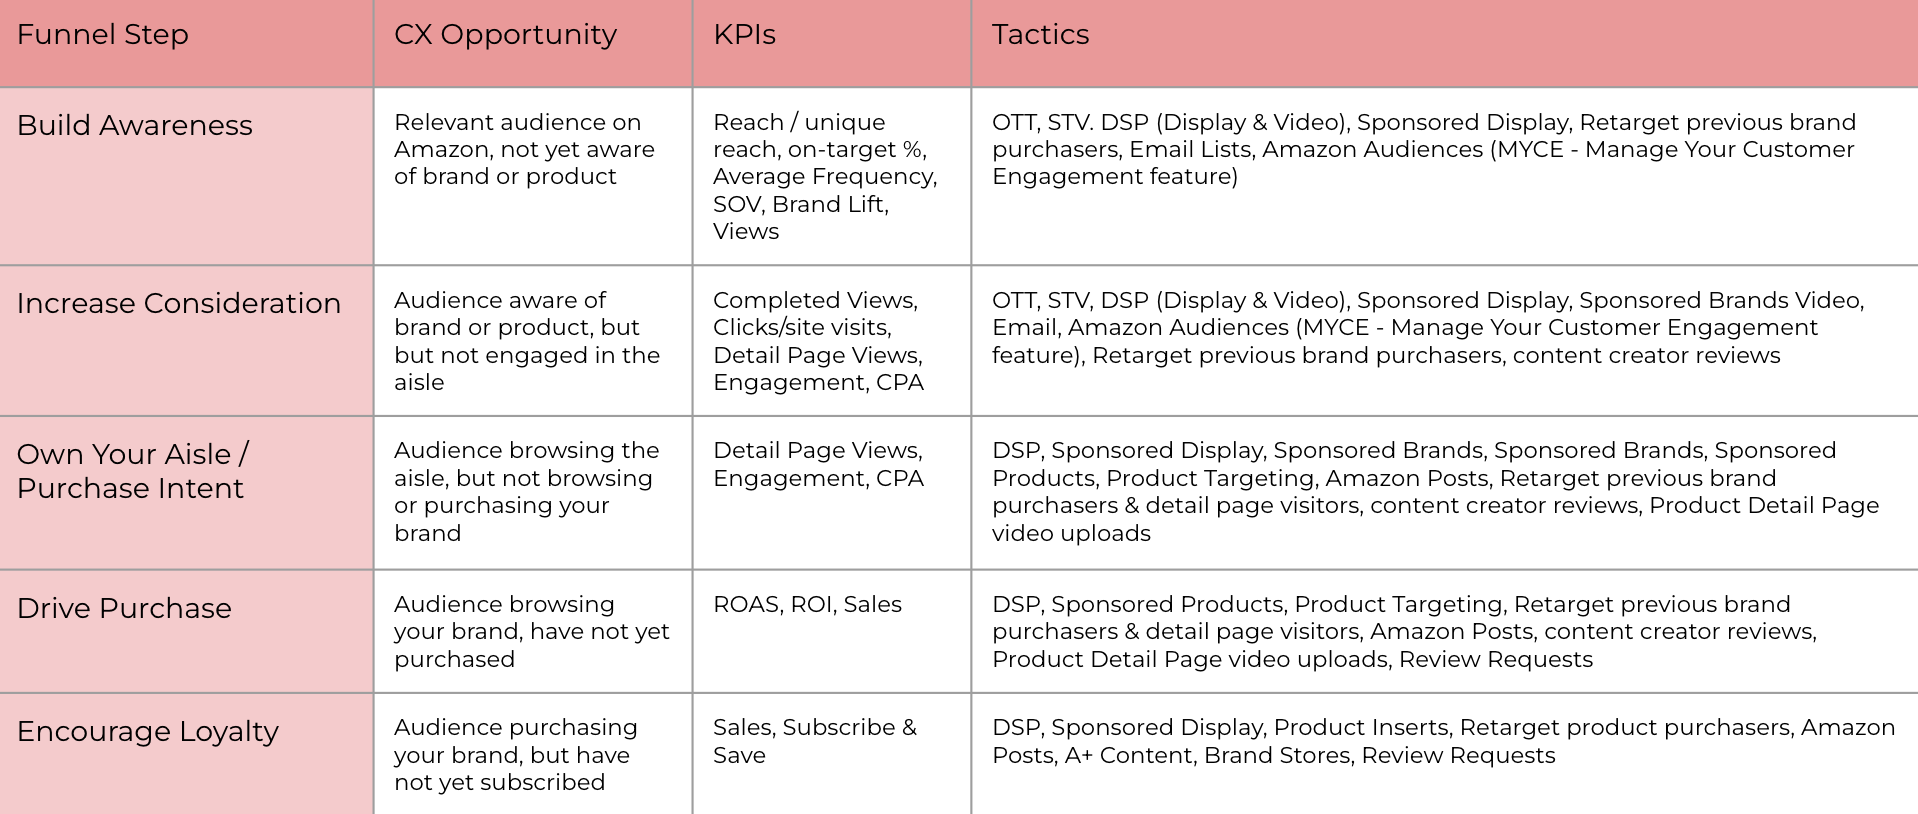 Amazon Advertising Full Funnel Tactics & KPIs